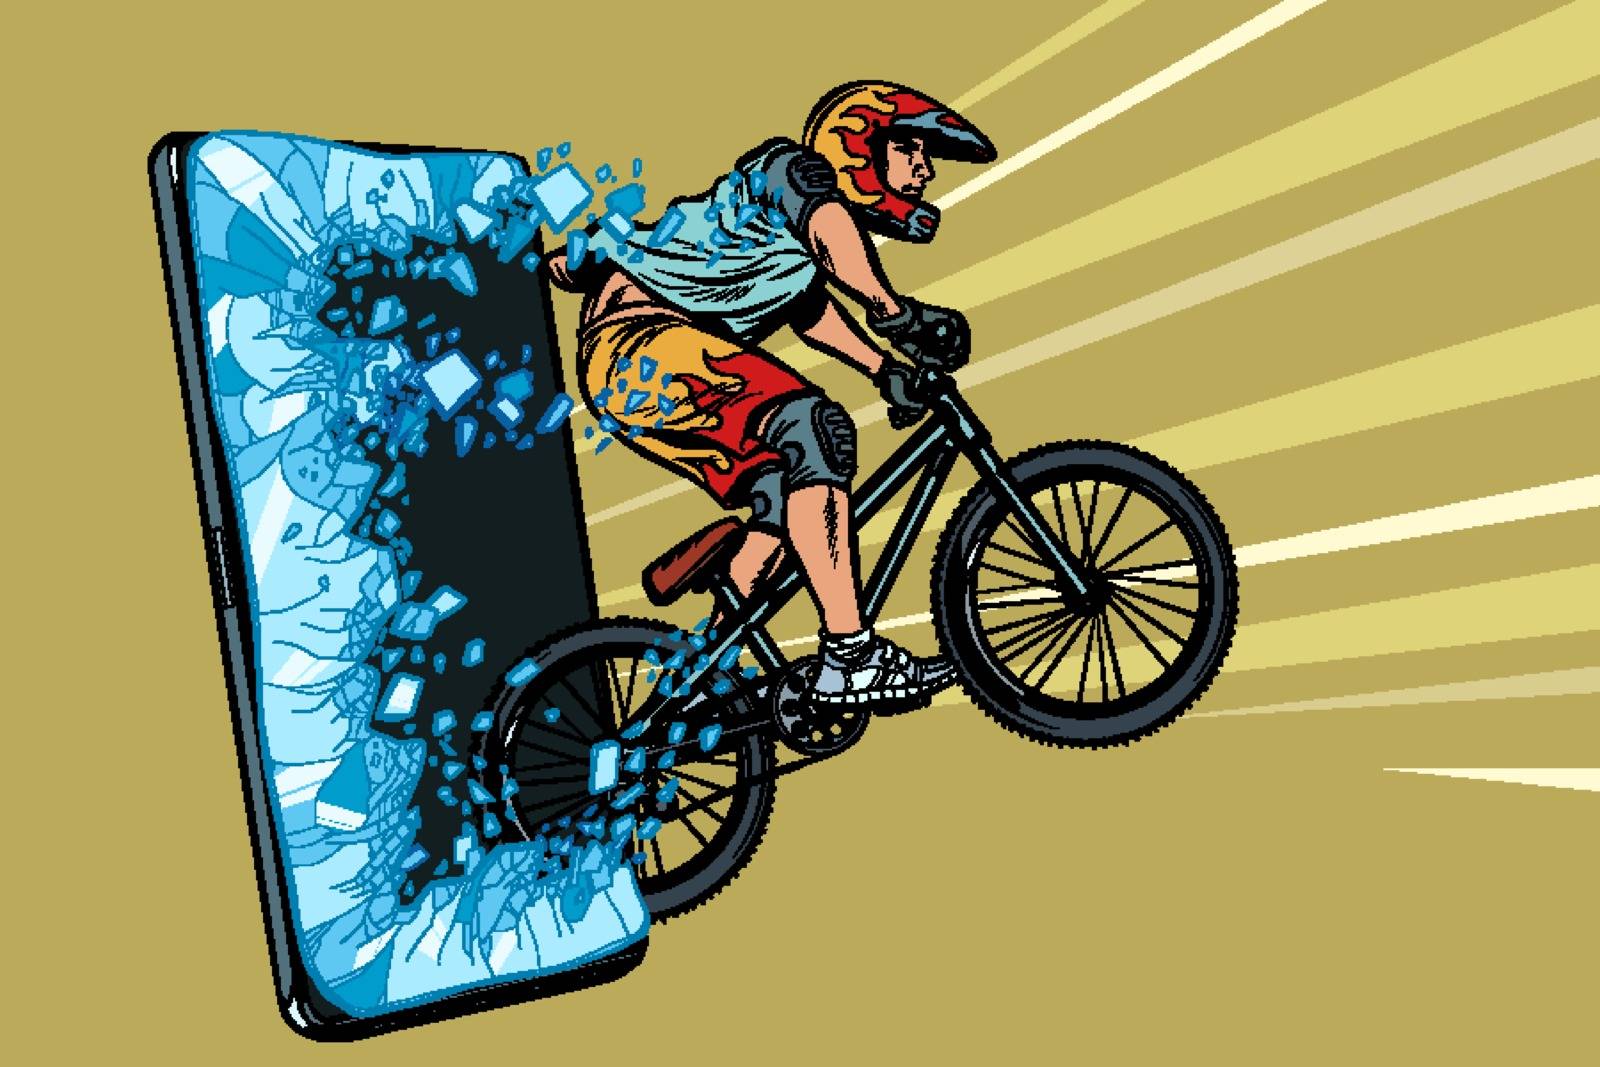 sports online news concept. athlete cyclist in a helmet on a mountain bike. Online Internet application service program. Pop art retro vector illustration drawing vintage kitsch